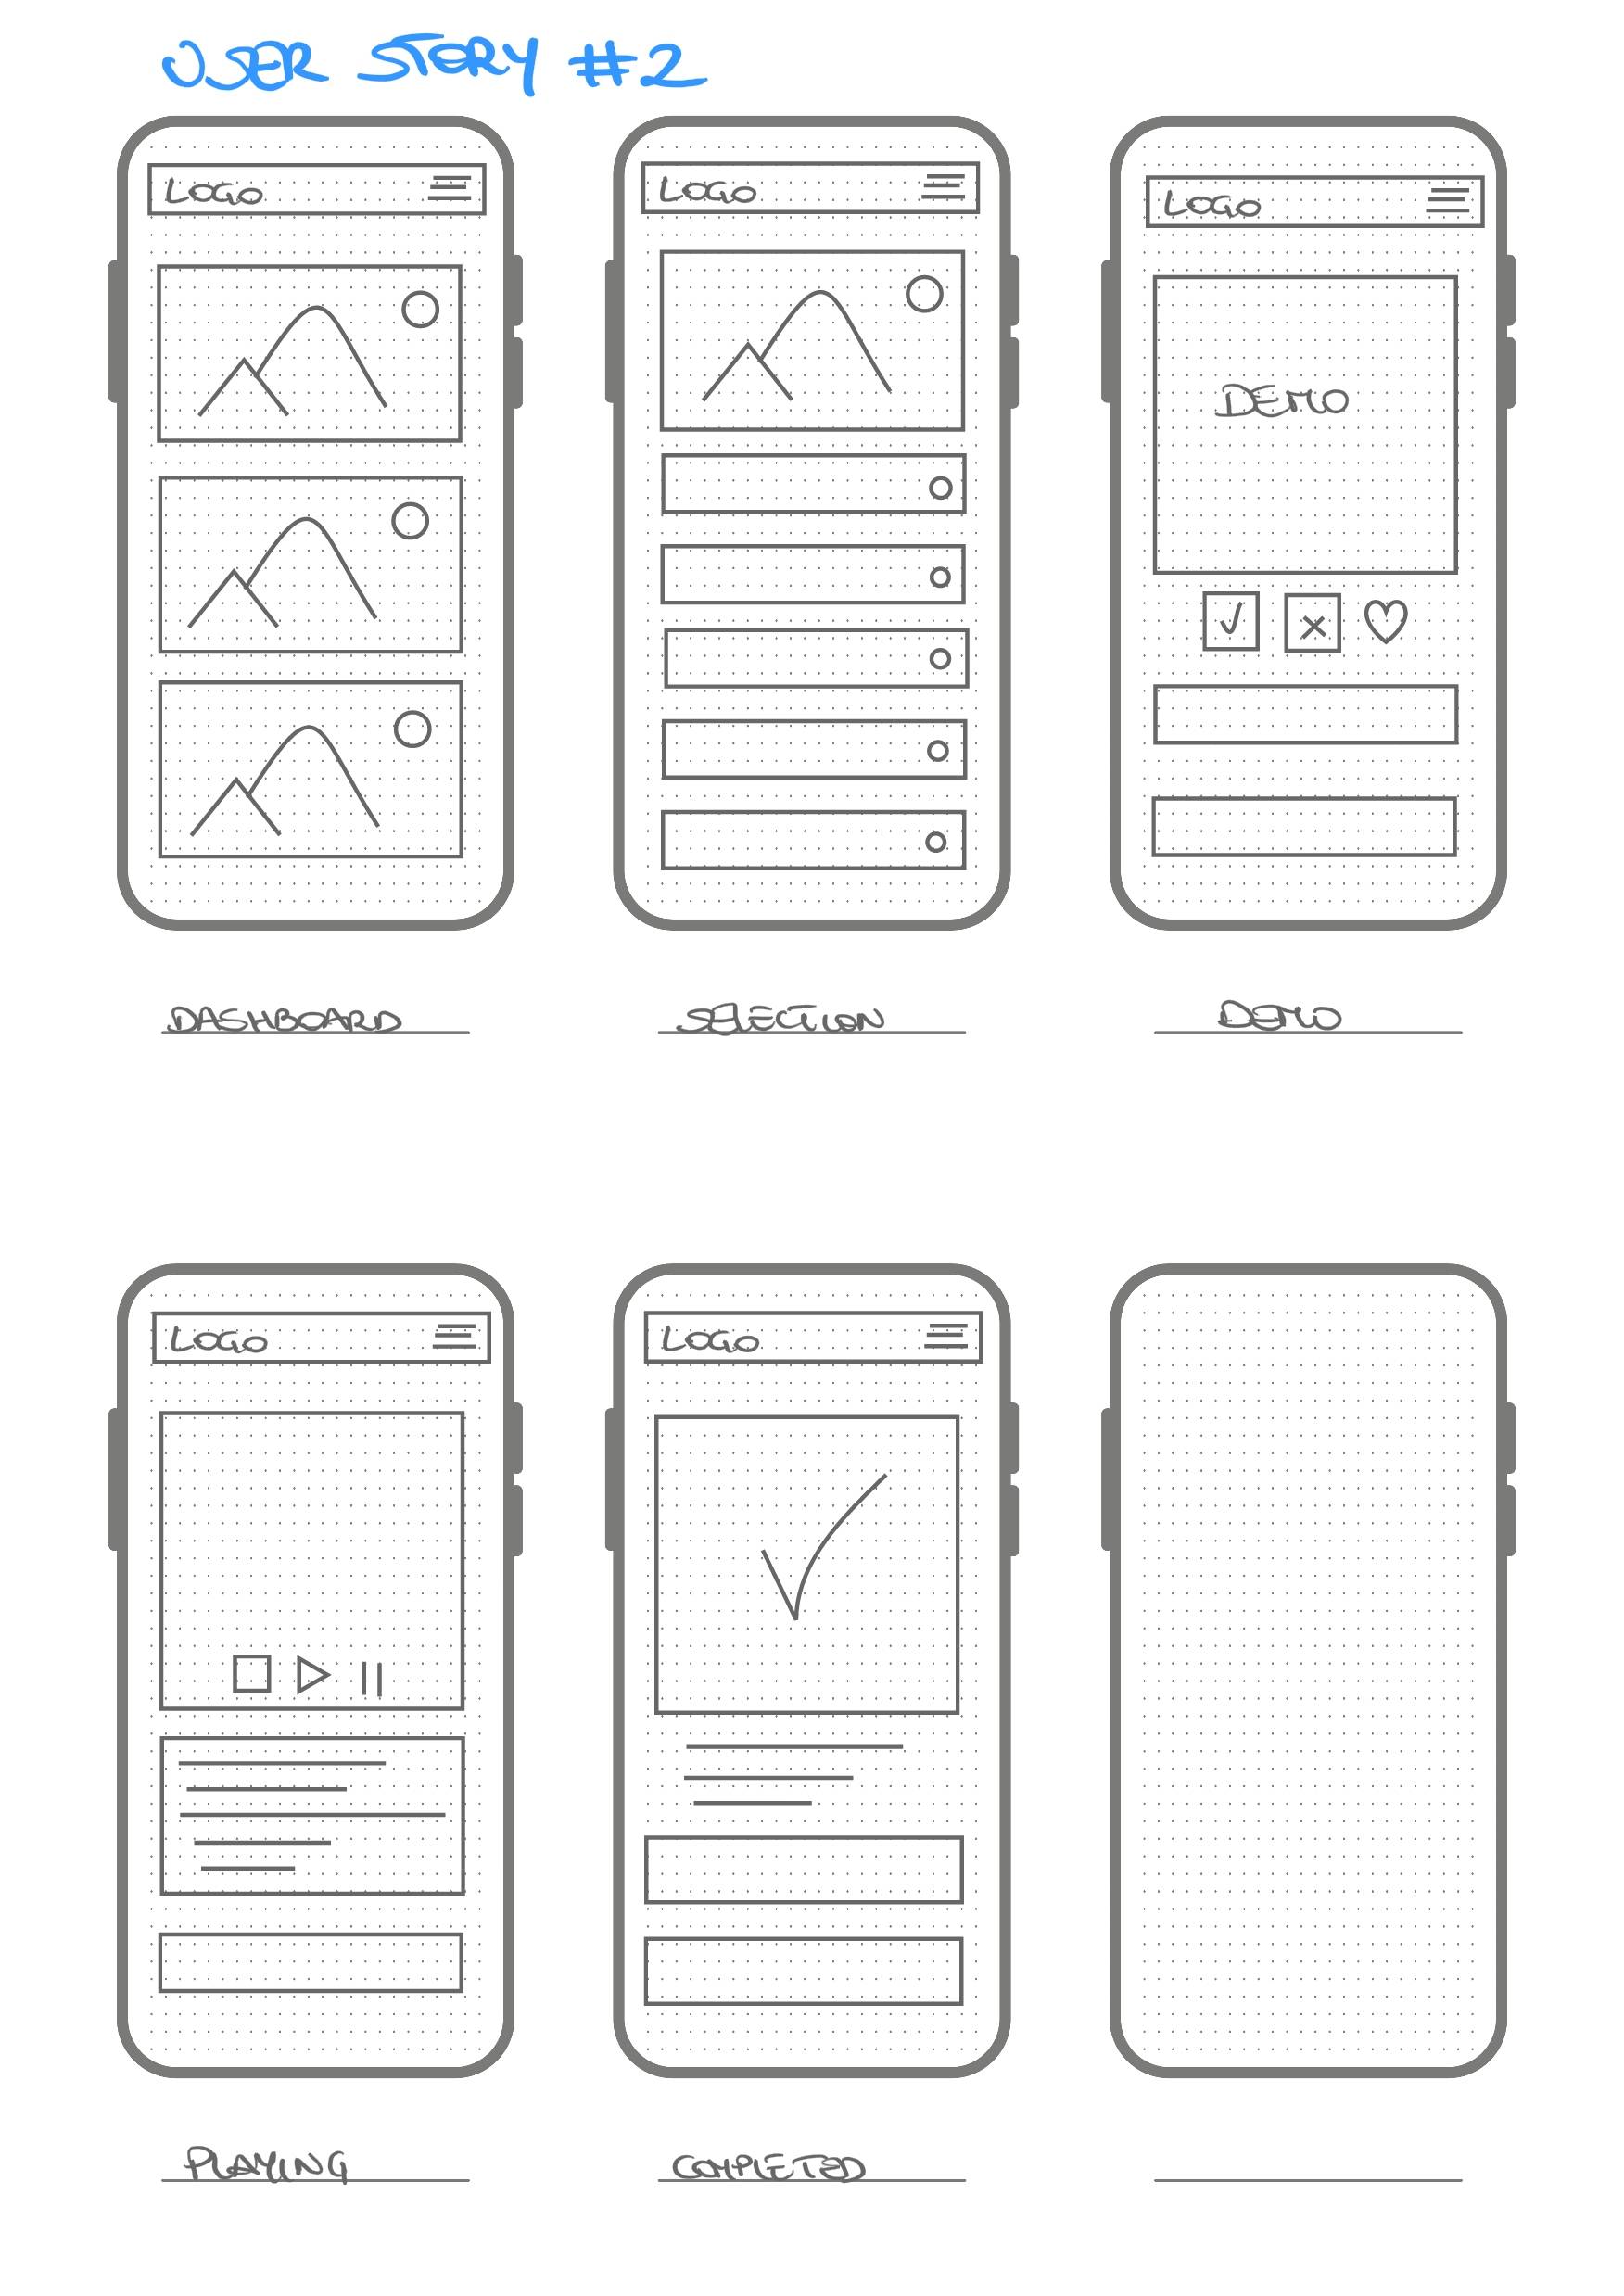 Samsung Notes templates... - Samsung Community